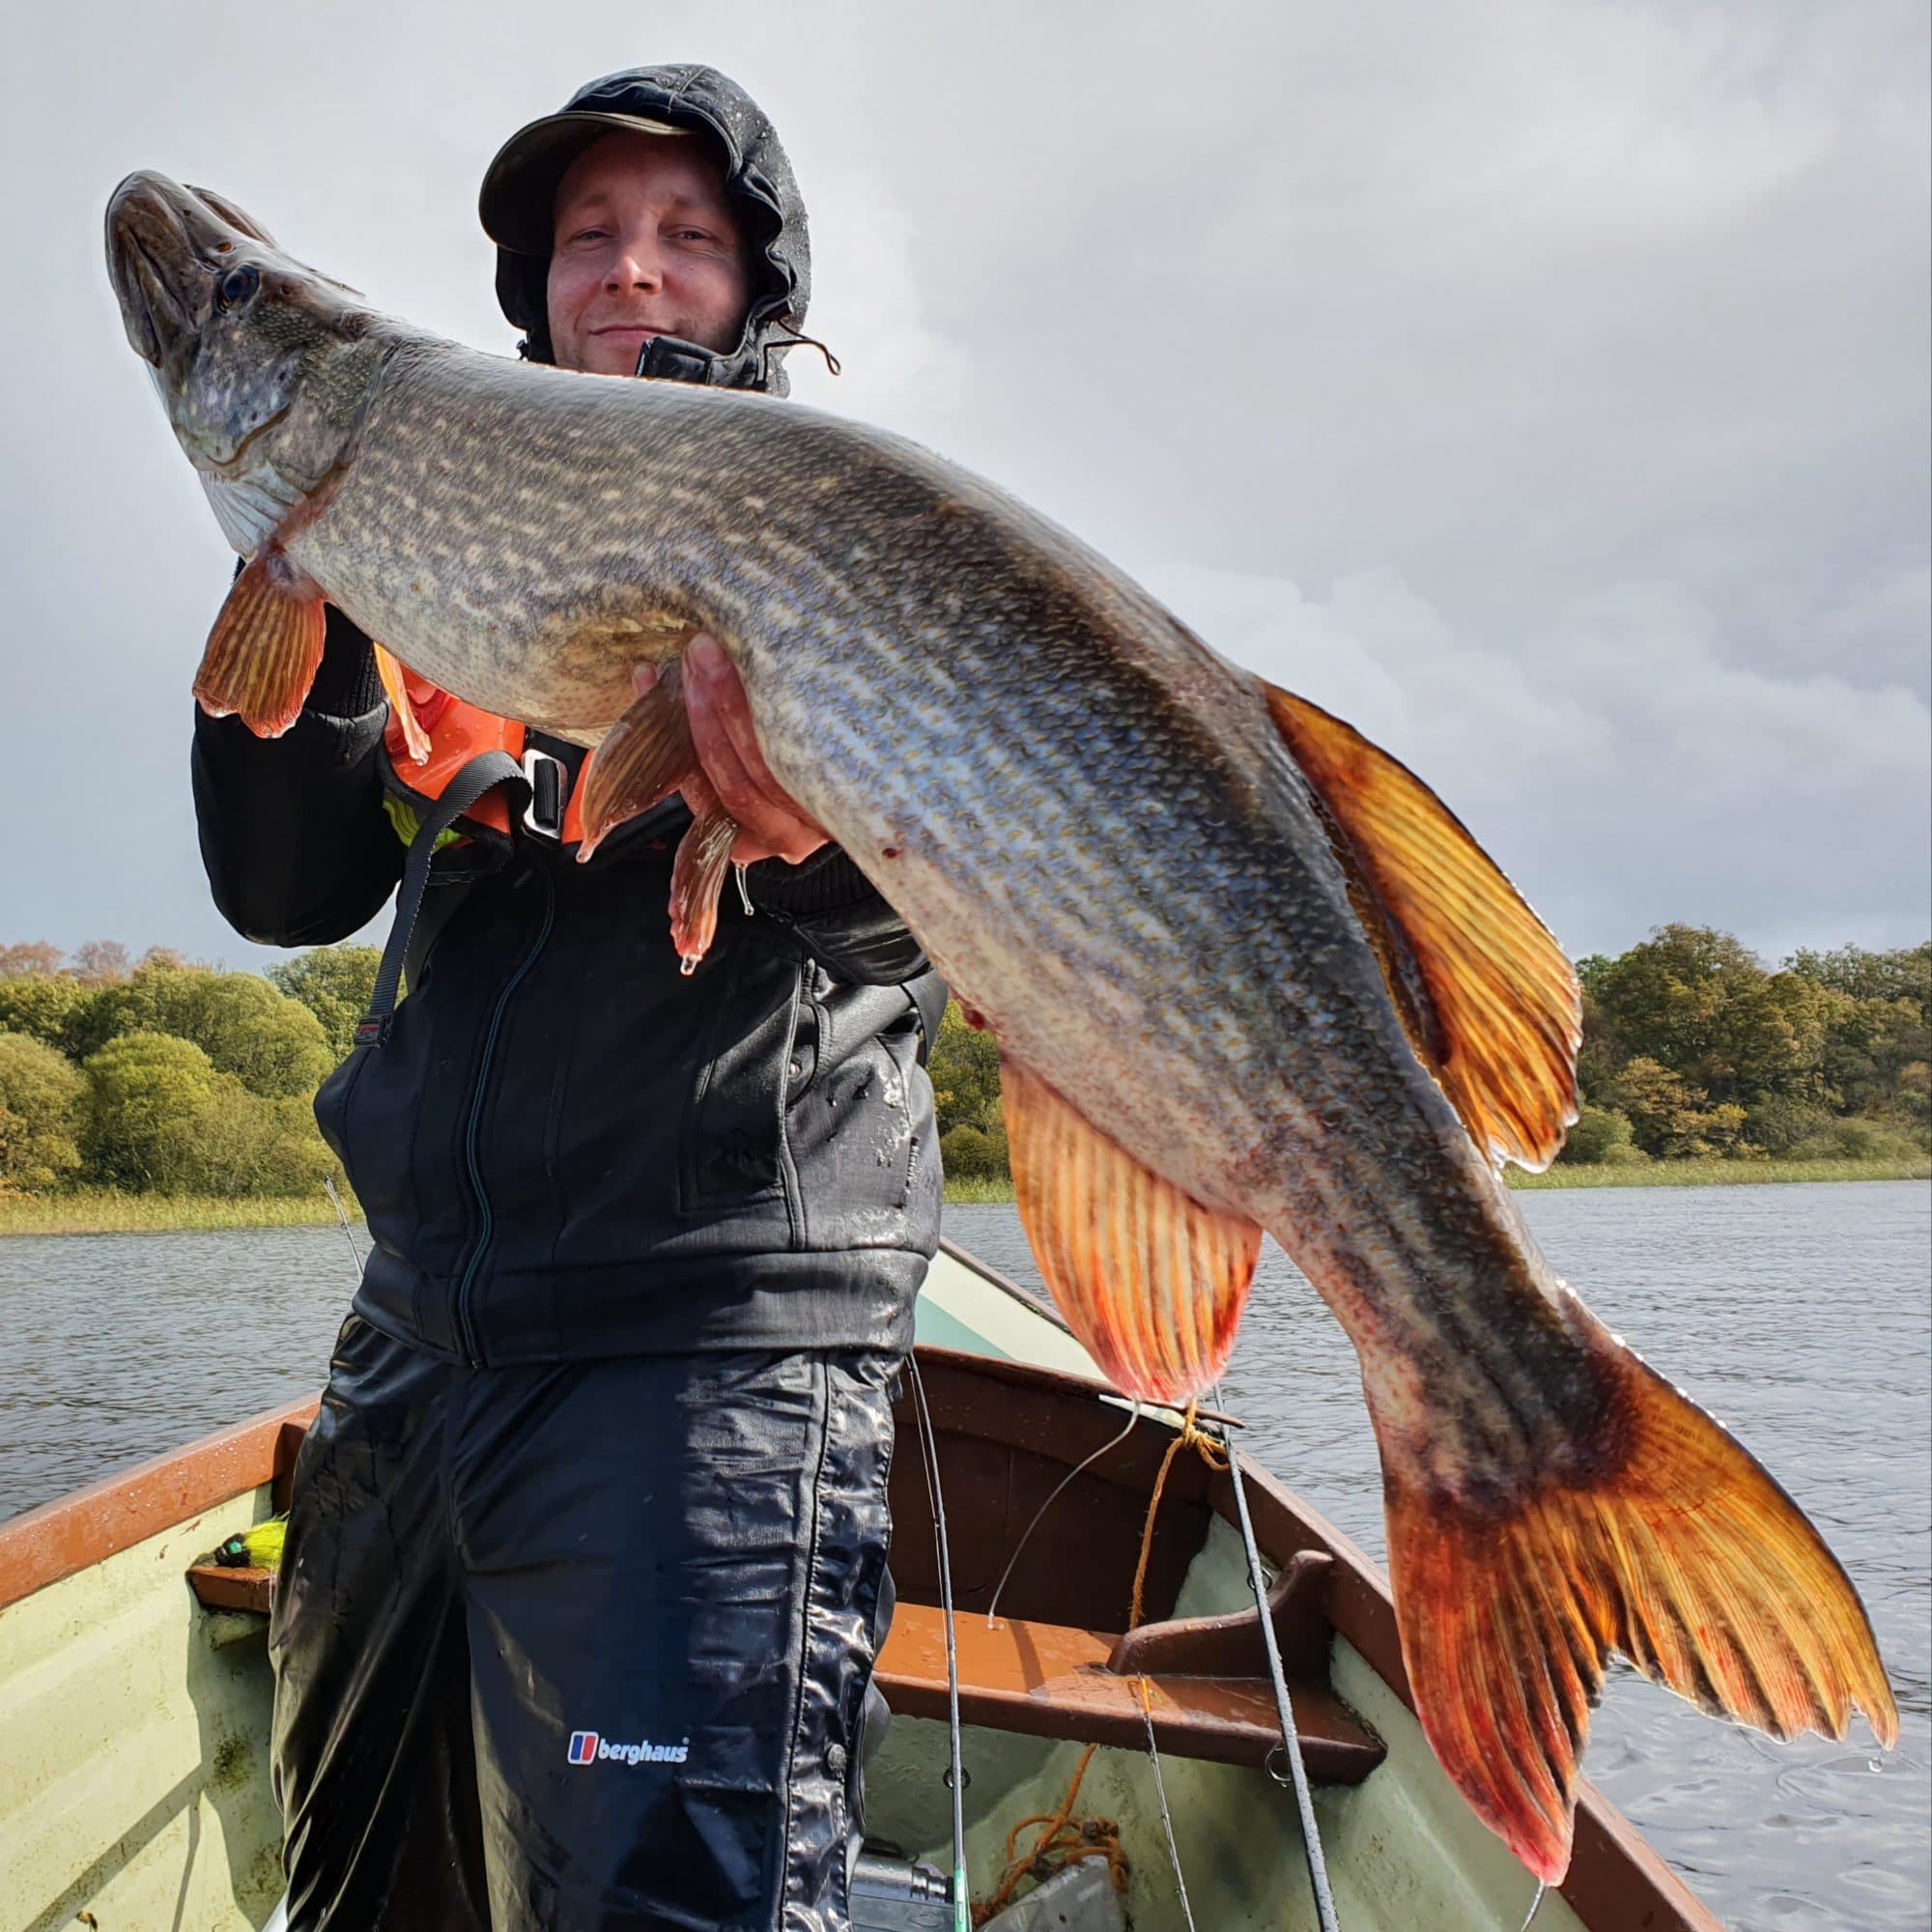 https://fishinginireland.info/wp-content/uploads/2019/10/Patrick-Dutch-Angler.jpg